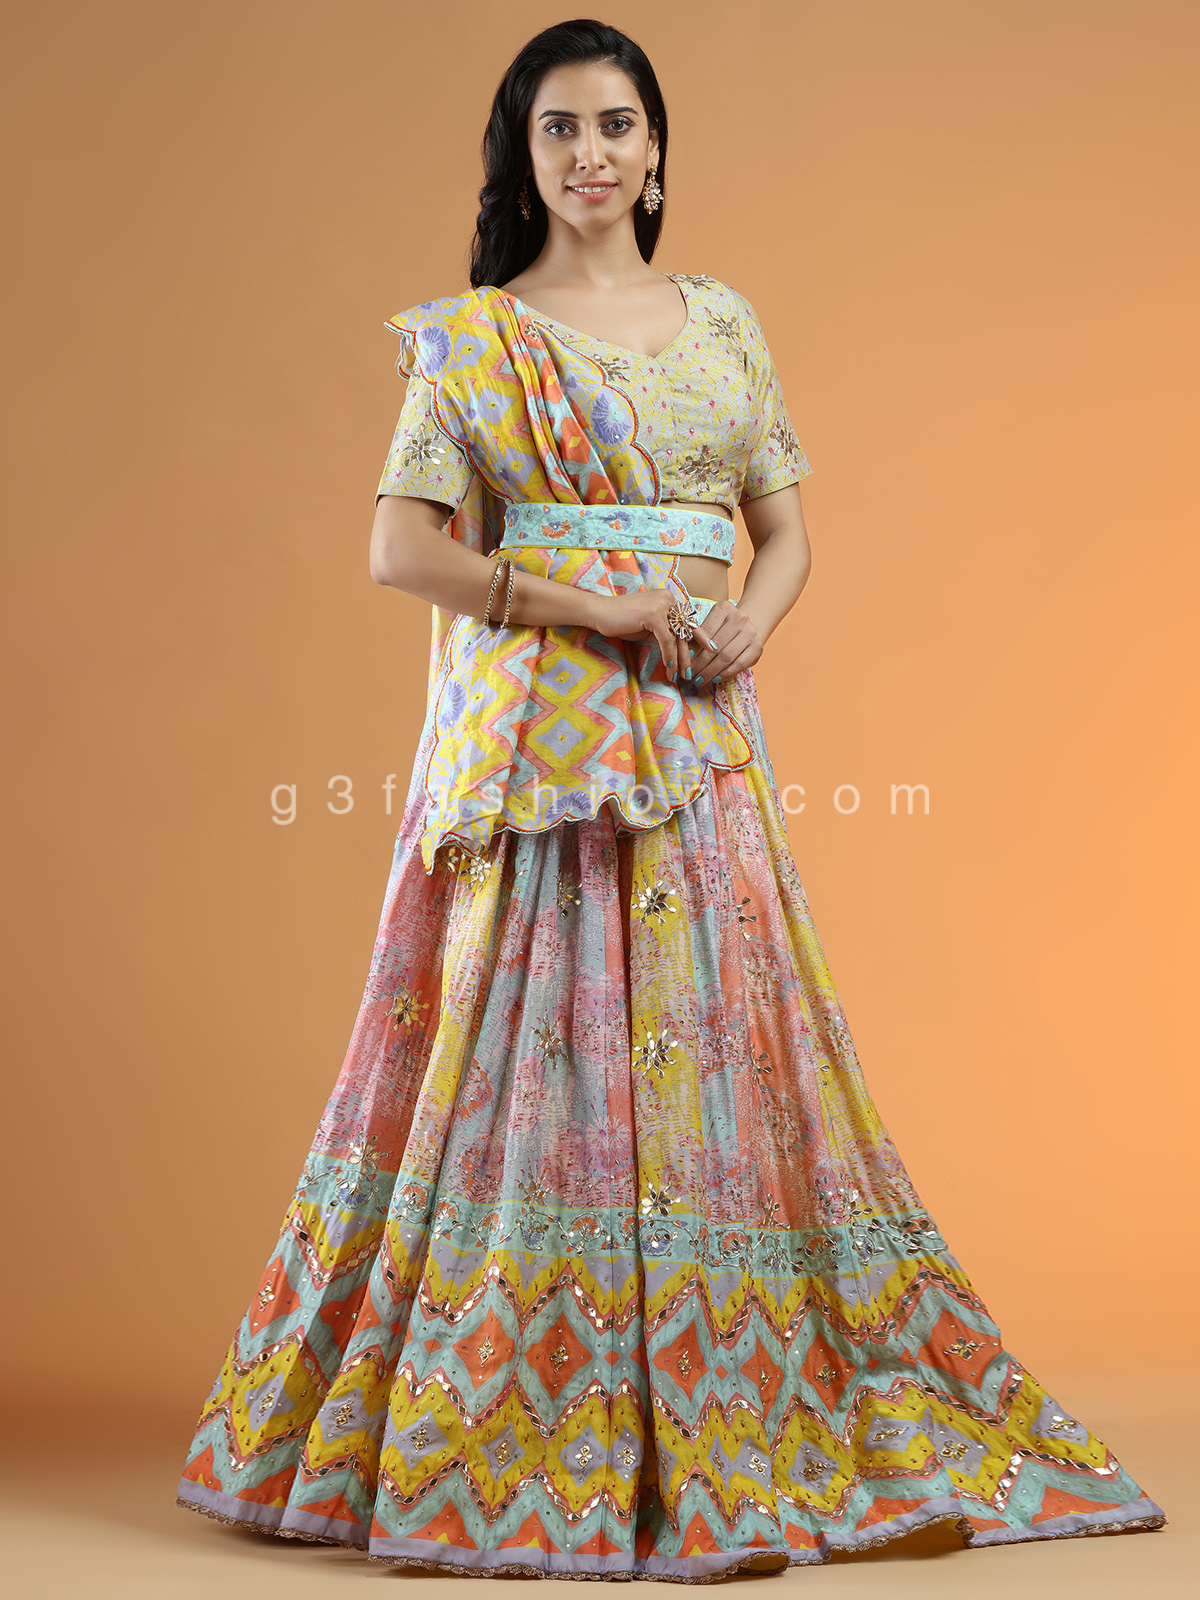 Jute beige wedding wear designer sherwani - G3-MSH10004 | G3fashion.com